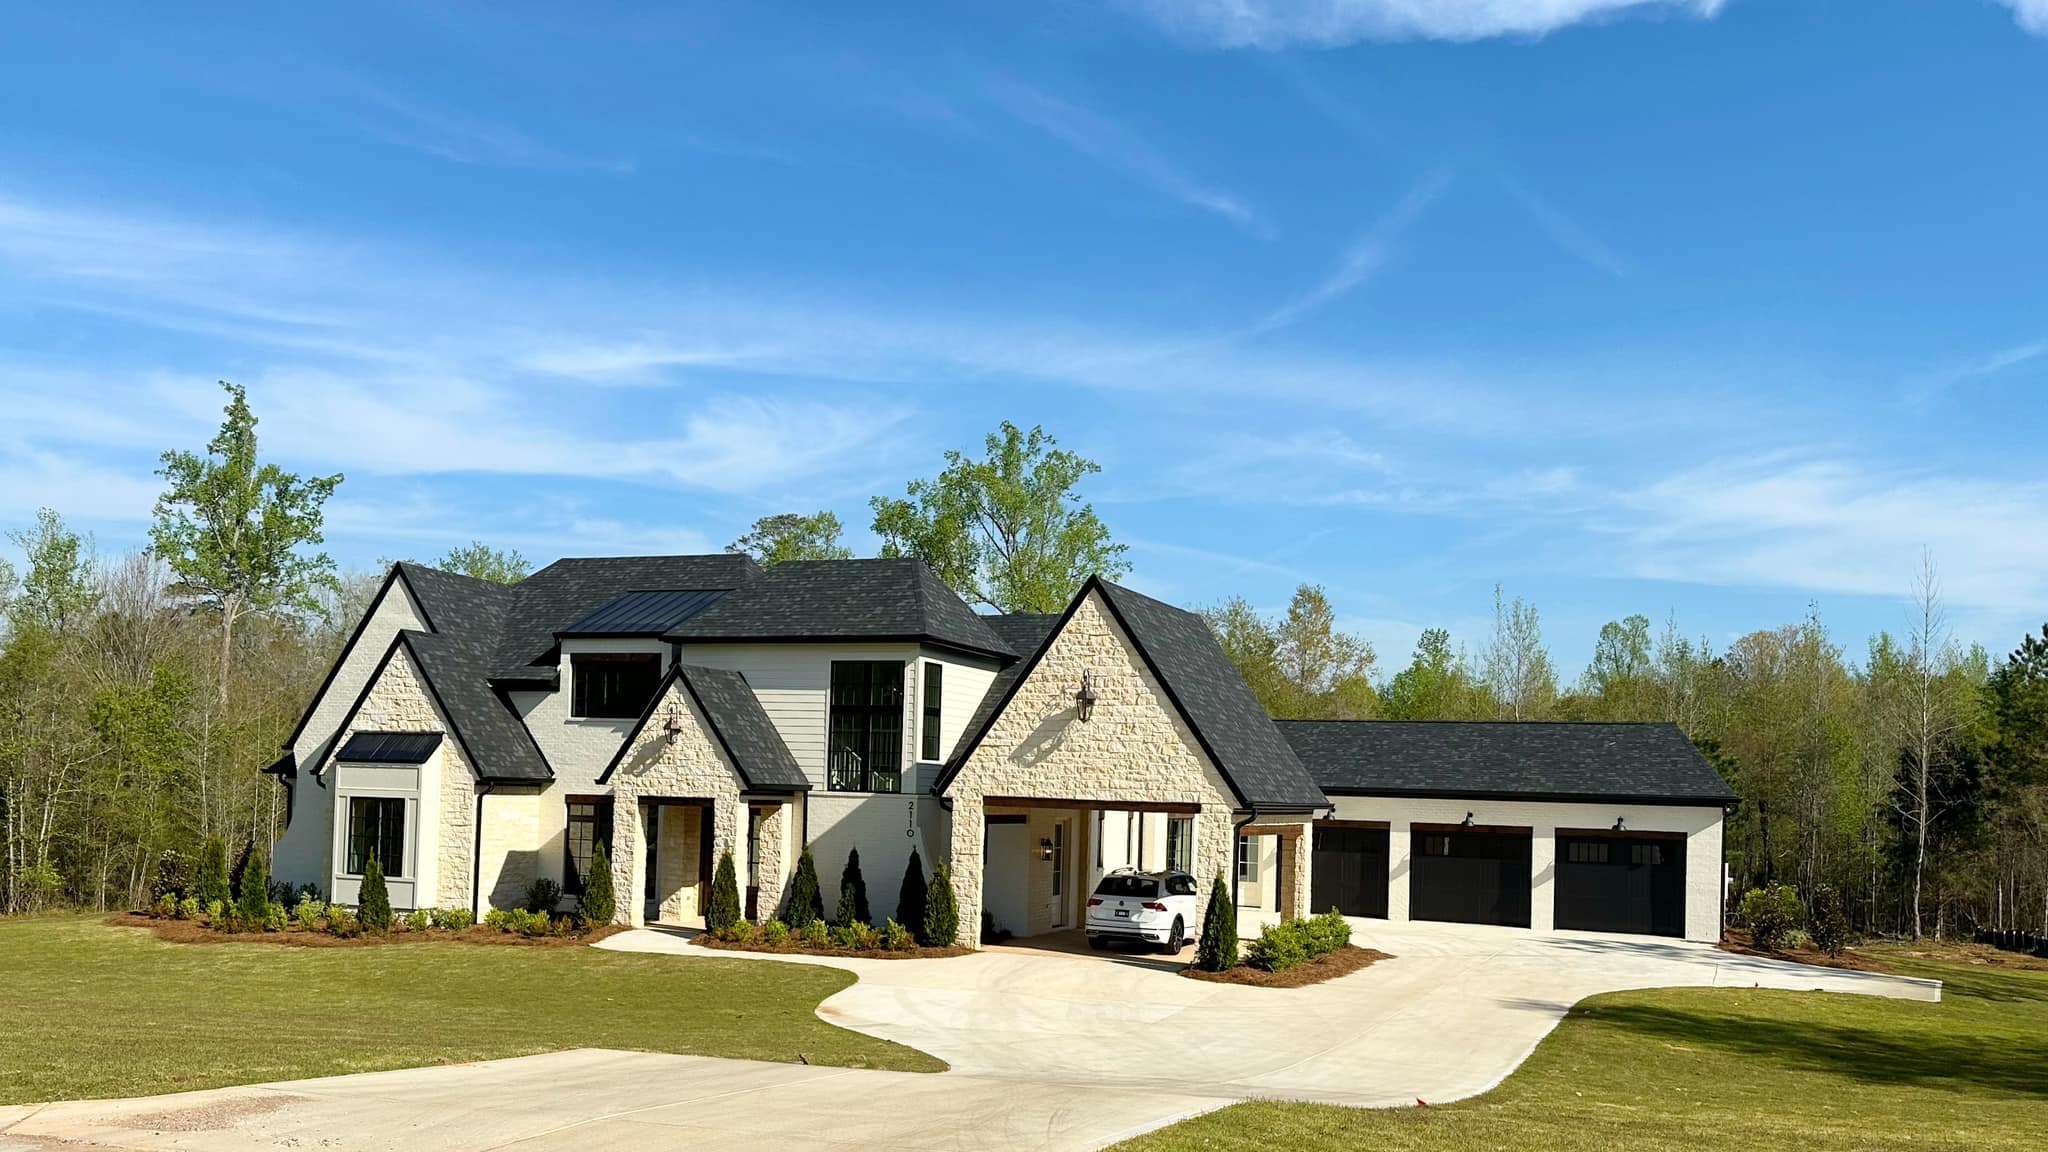 Quail Chase Homes for Sale in Auburn AL